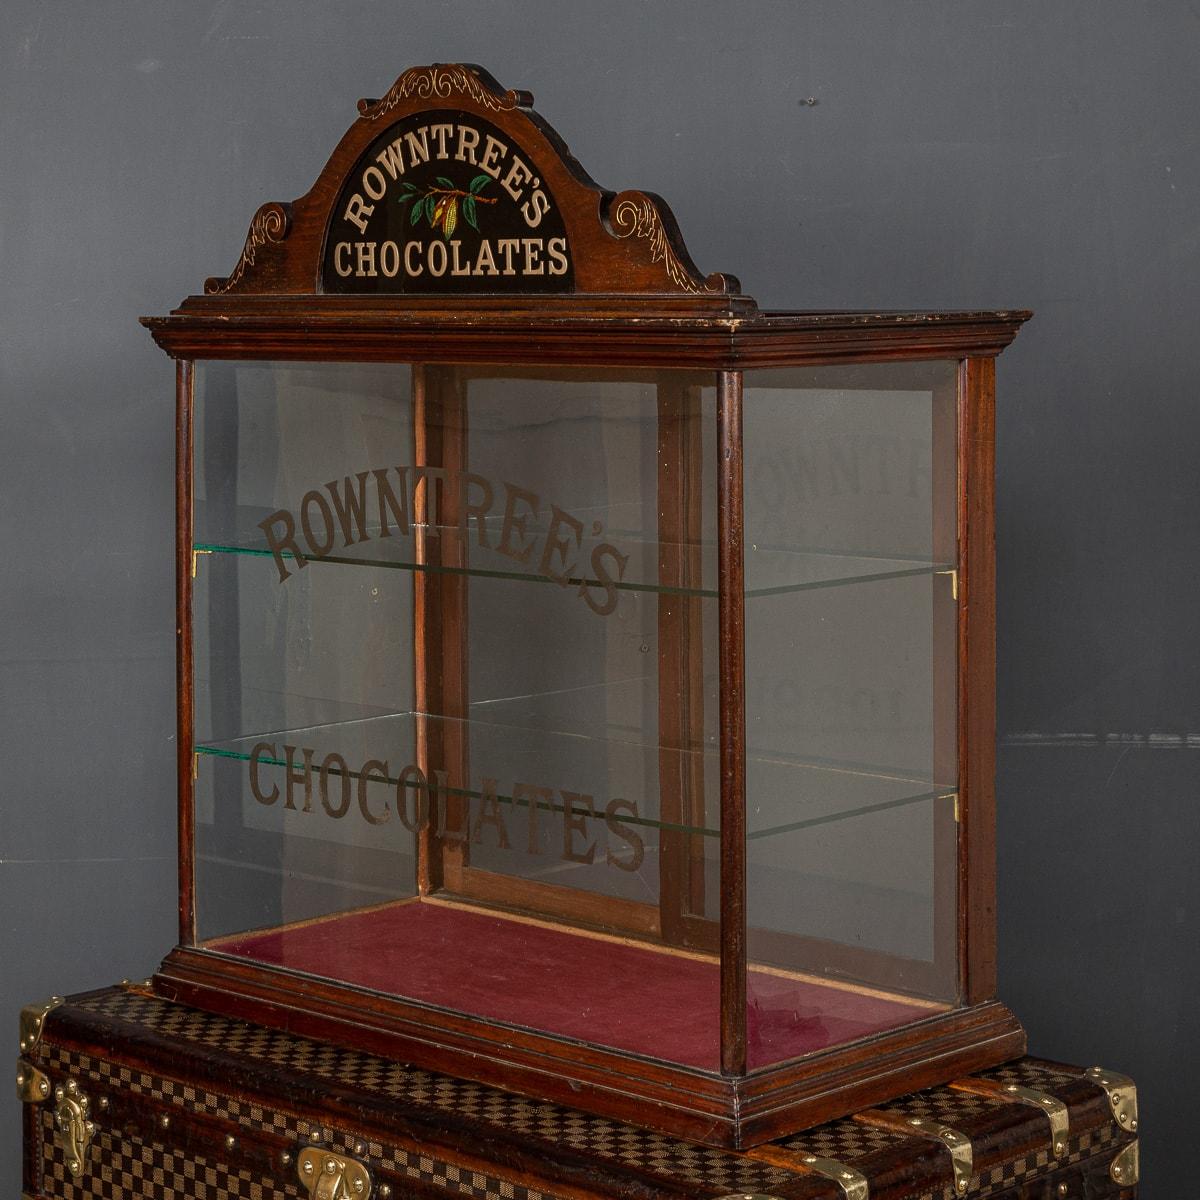 Glass 20th Century British Rowntree Chocolate Shop Display Cabinet, circa 1900